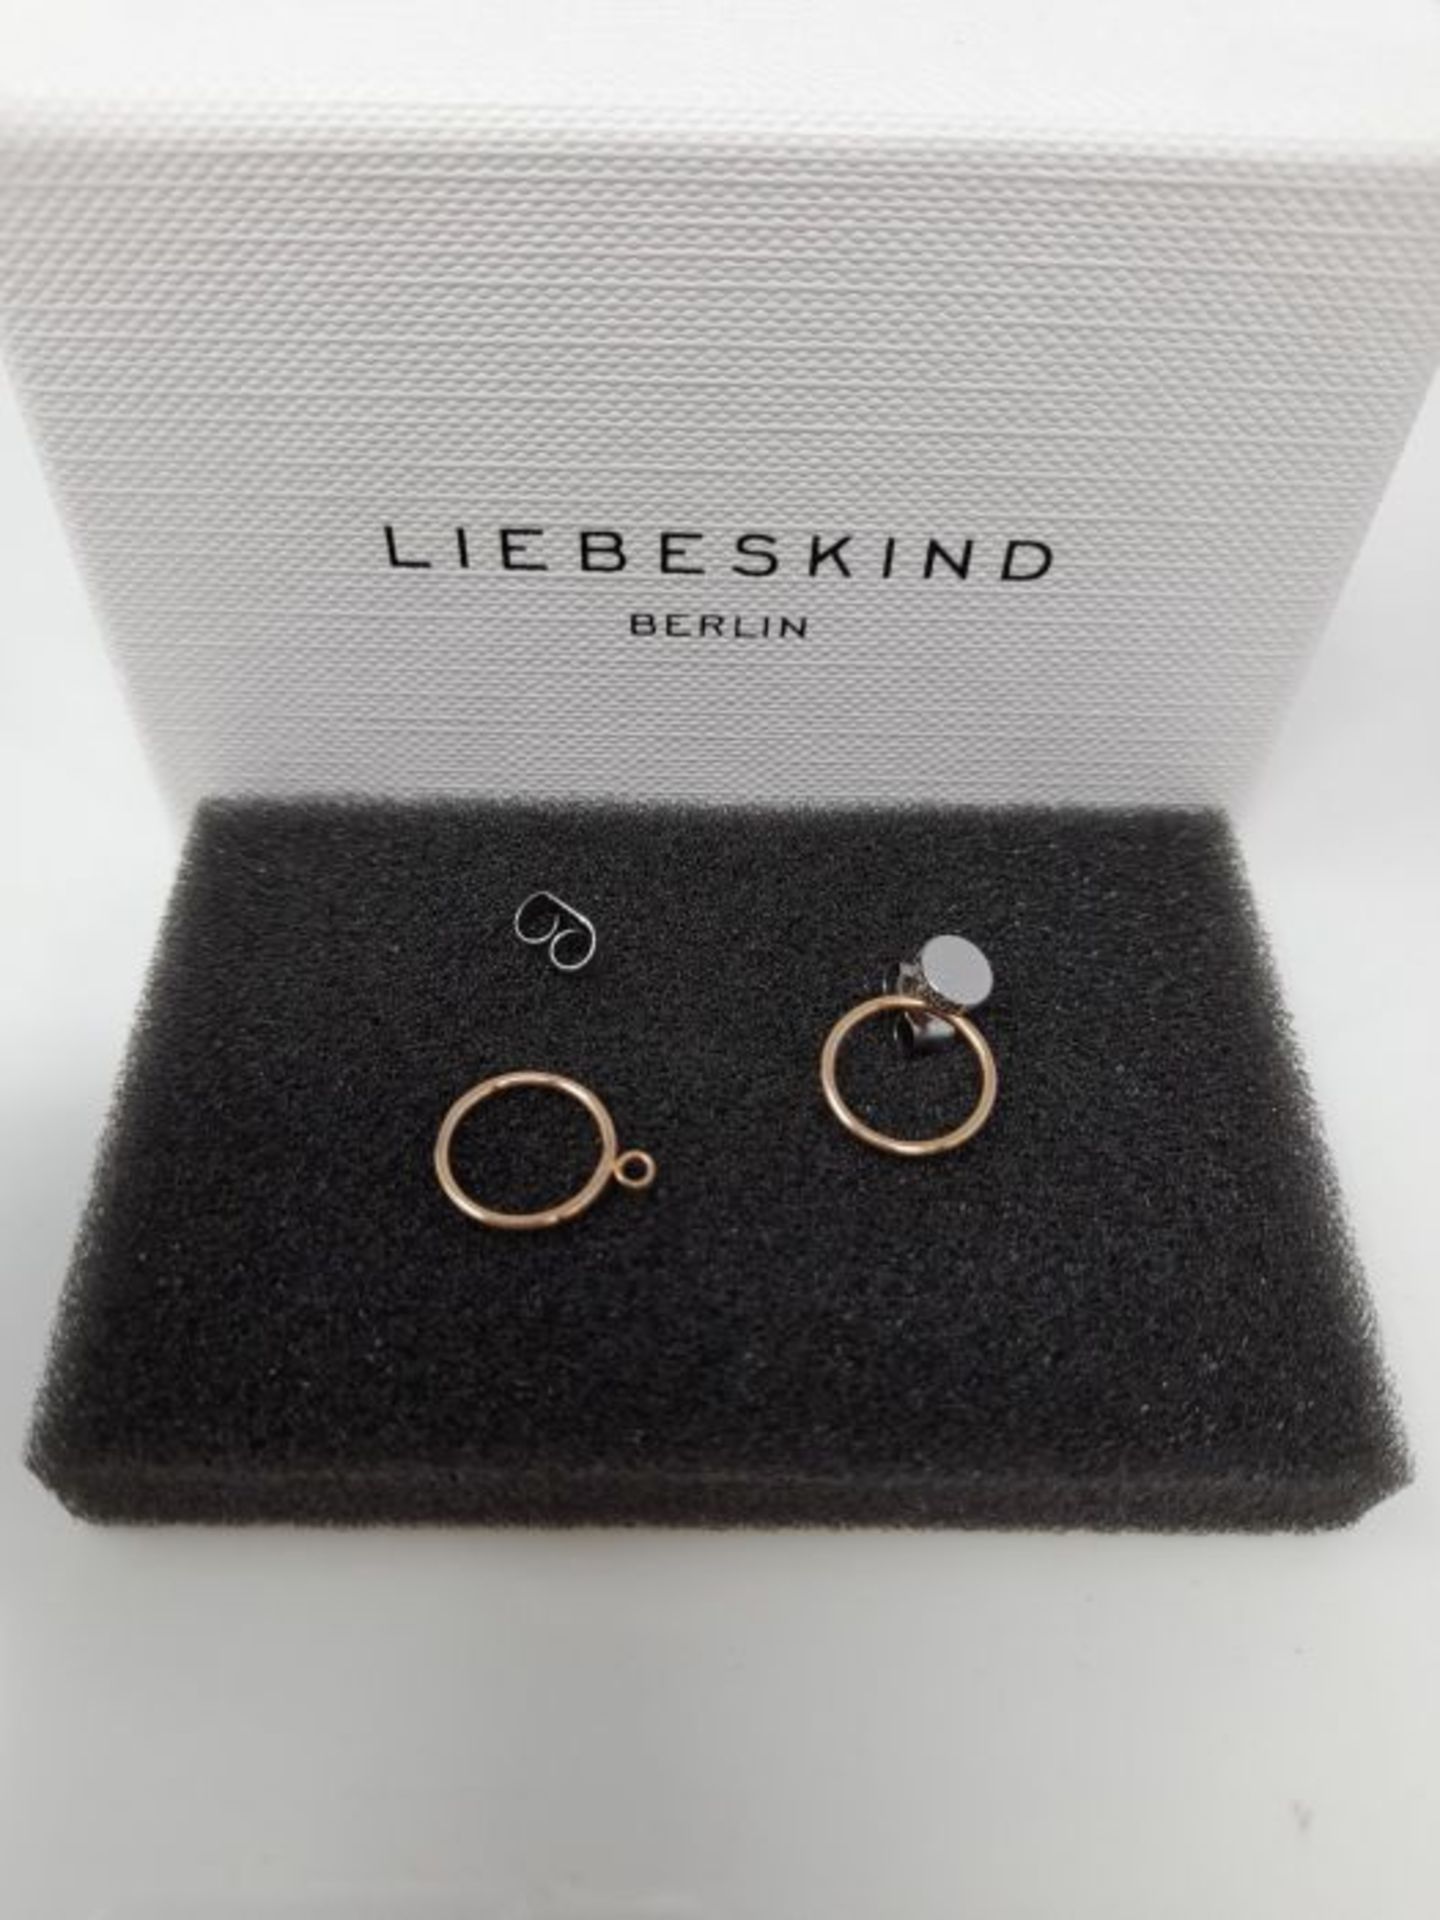 [INCOMPLETE] Liebeskind Berlin Women's stainless steel stud earrings 15 mm 2 Colour